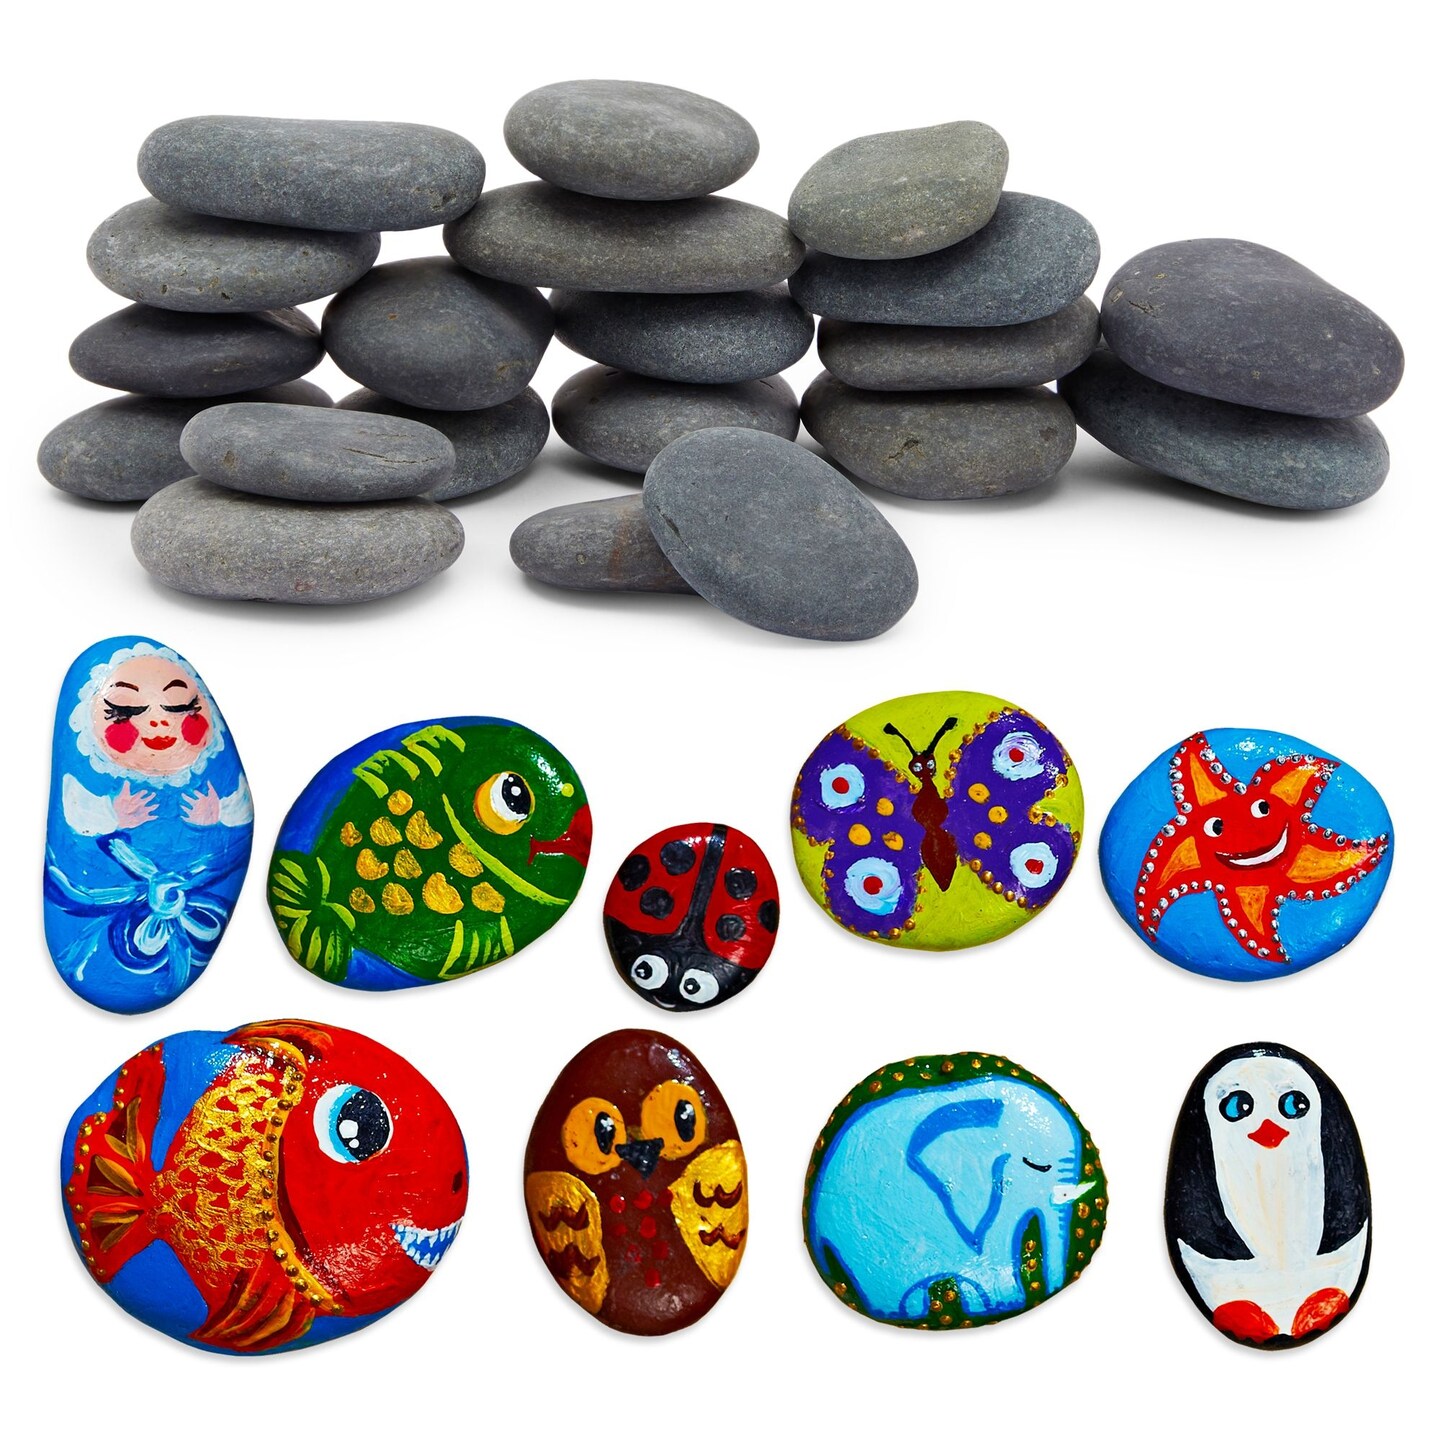 DIY Colored Stone Crafts  Crafts, Stone crafts, Rock crafts